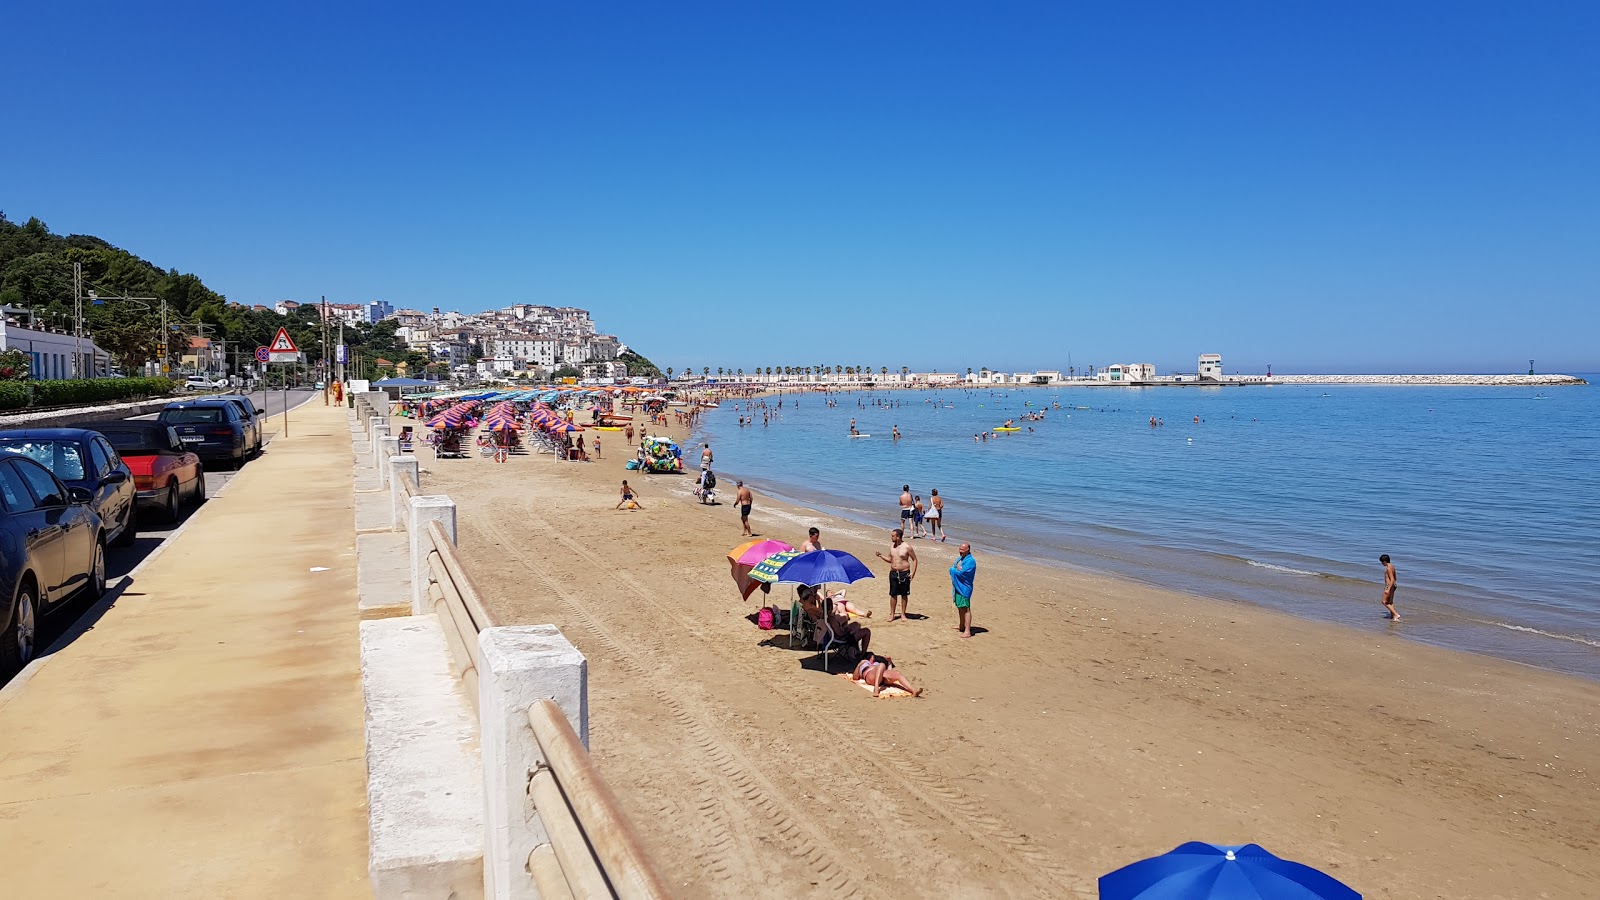 Spiaggia di Levante'in fotoğrafı turkuaz su yüzey ile